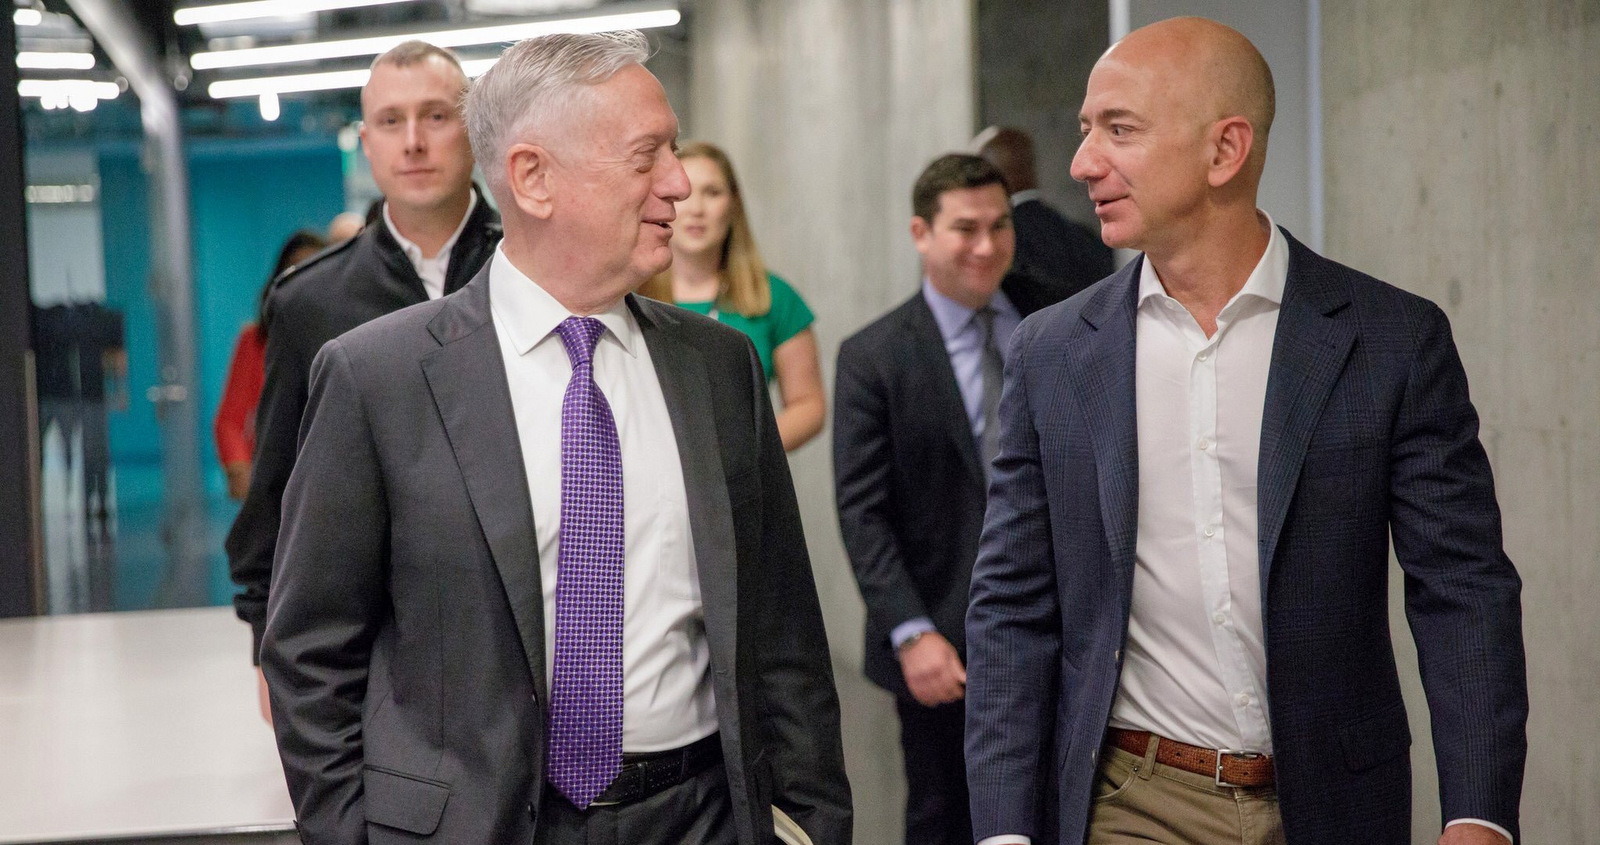 Defense Secretary James Mattis chats with Amazon founder Jeff Bezos during a visit to west coast tech and defense companies. (Jeff Bezos/Twitter)